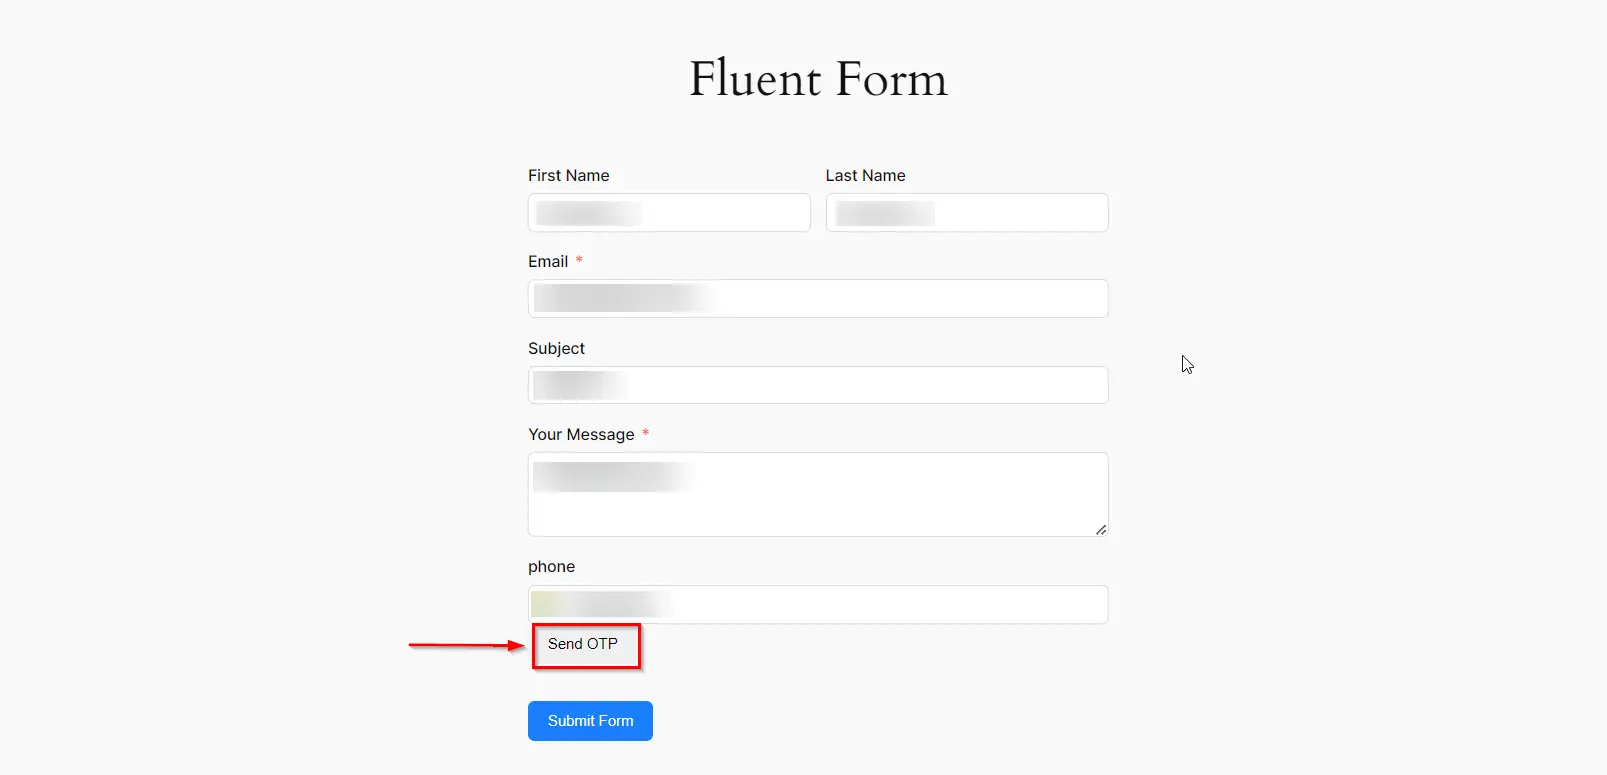 WordPress Fluent Form with OTP - Fluent Form Form